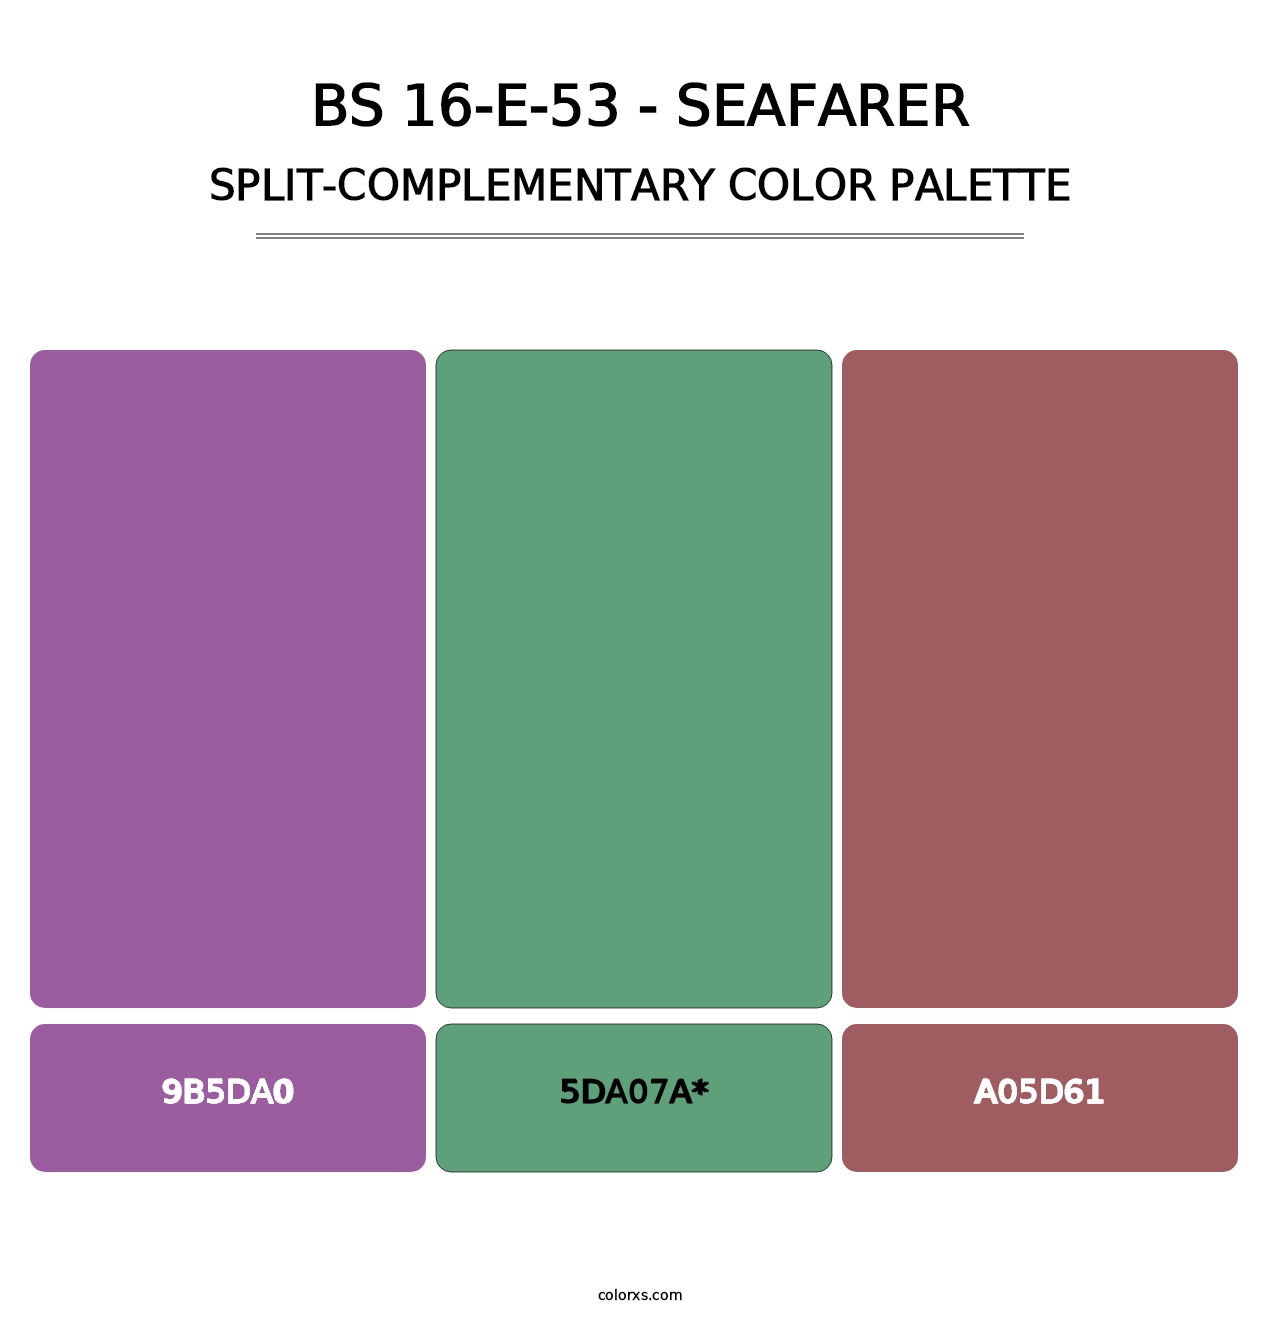 BS 16-E-53 - Seafarer - Split-Complementary Color Palette